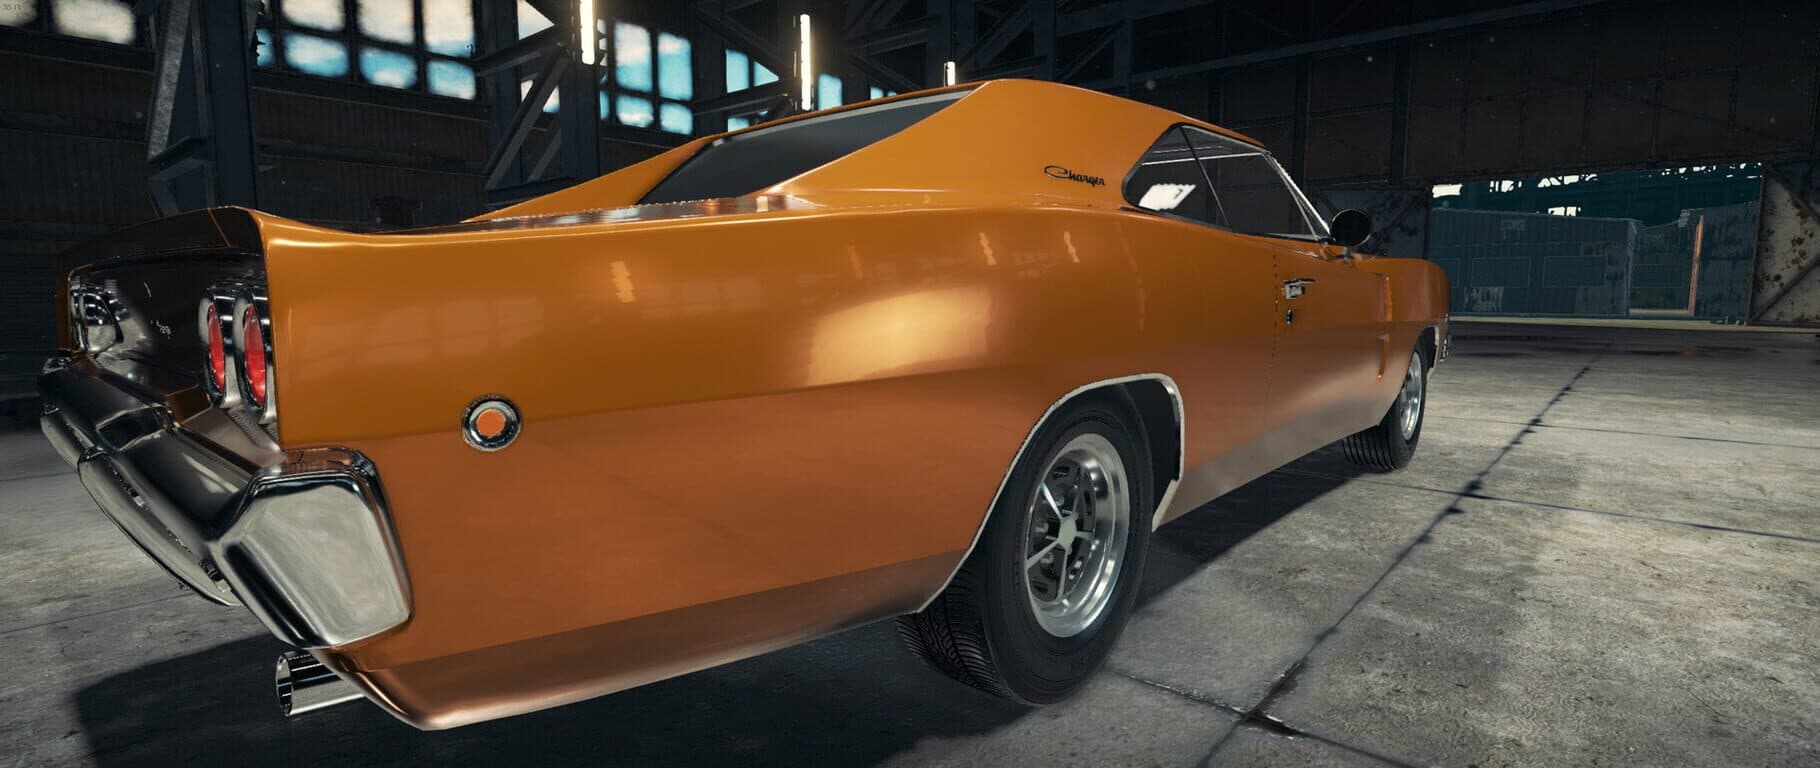 Car Mechanic Simulator 2018: Dodge Image